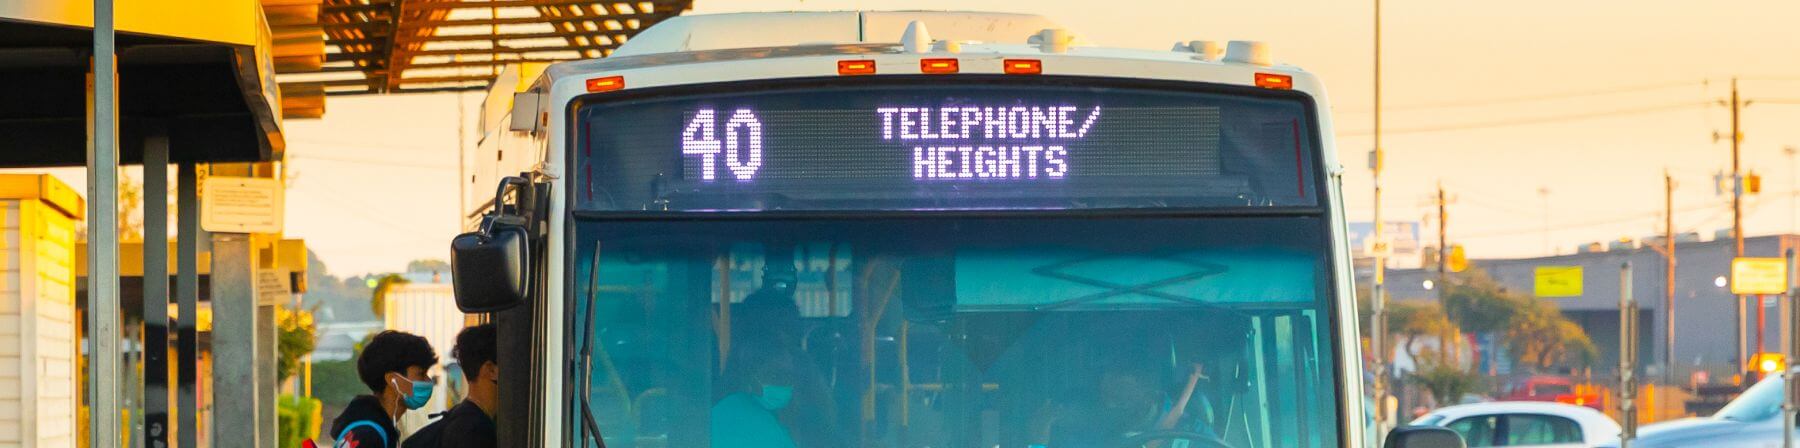 40 Telephone / Heights bus